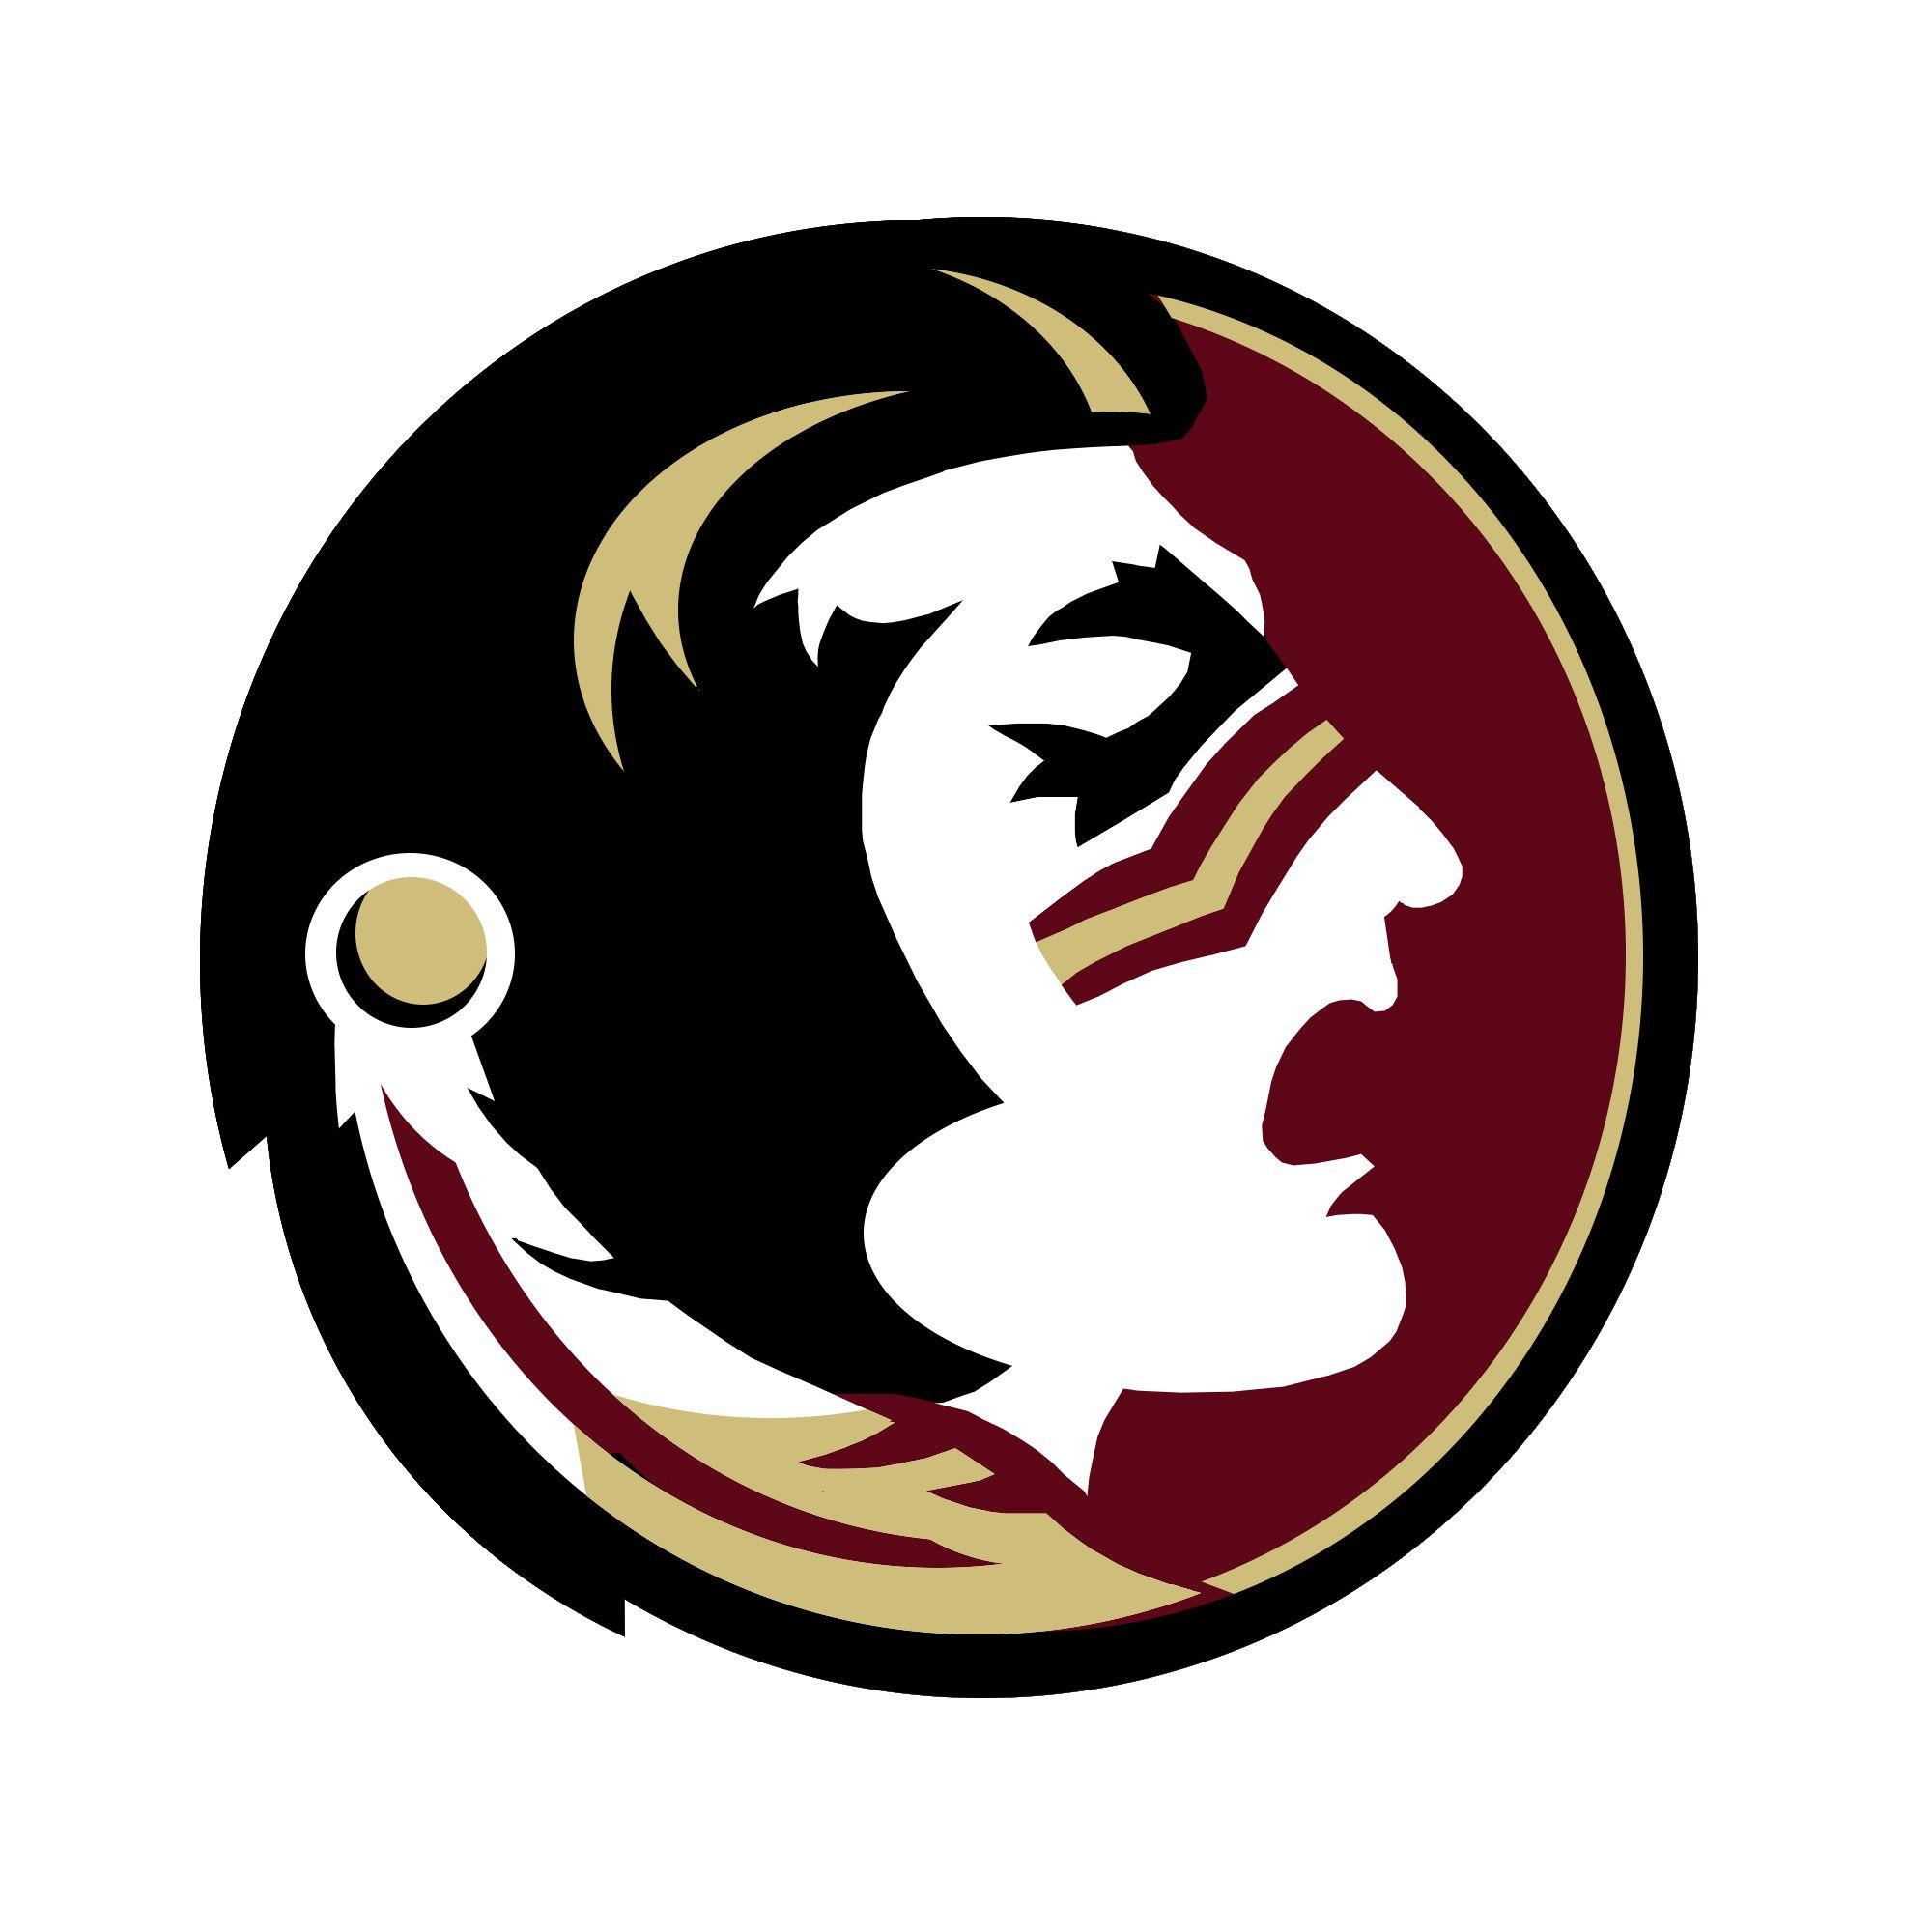 Florida State Seminoles Logo - Updated Florida State Seminoles Logo - Concepts - Chris Creamer's ...